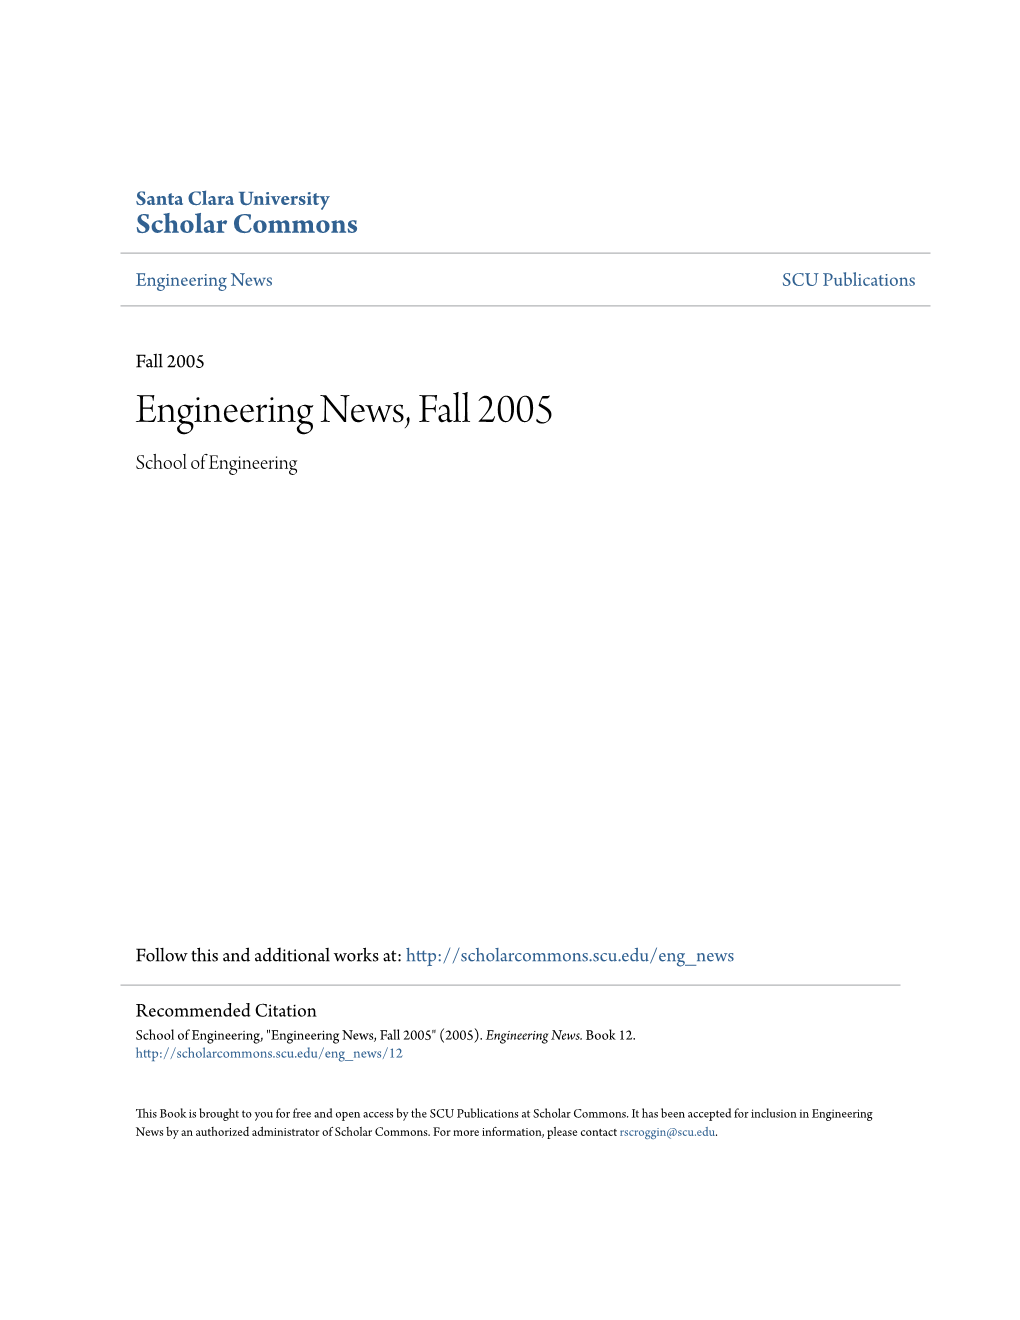 Engineering News, Fall 2005 School of Engineering